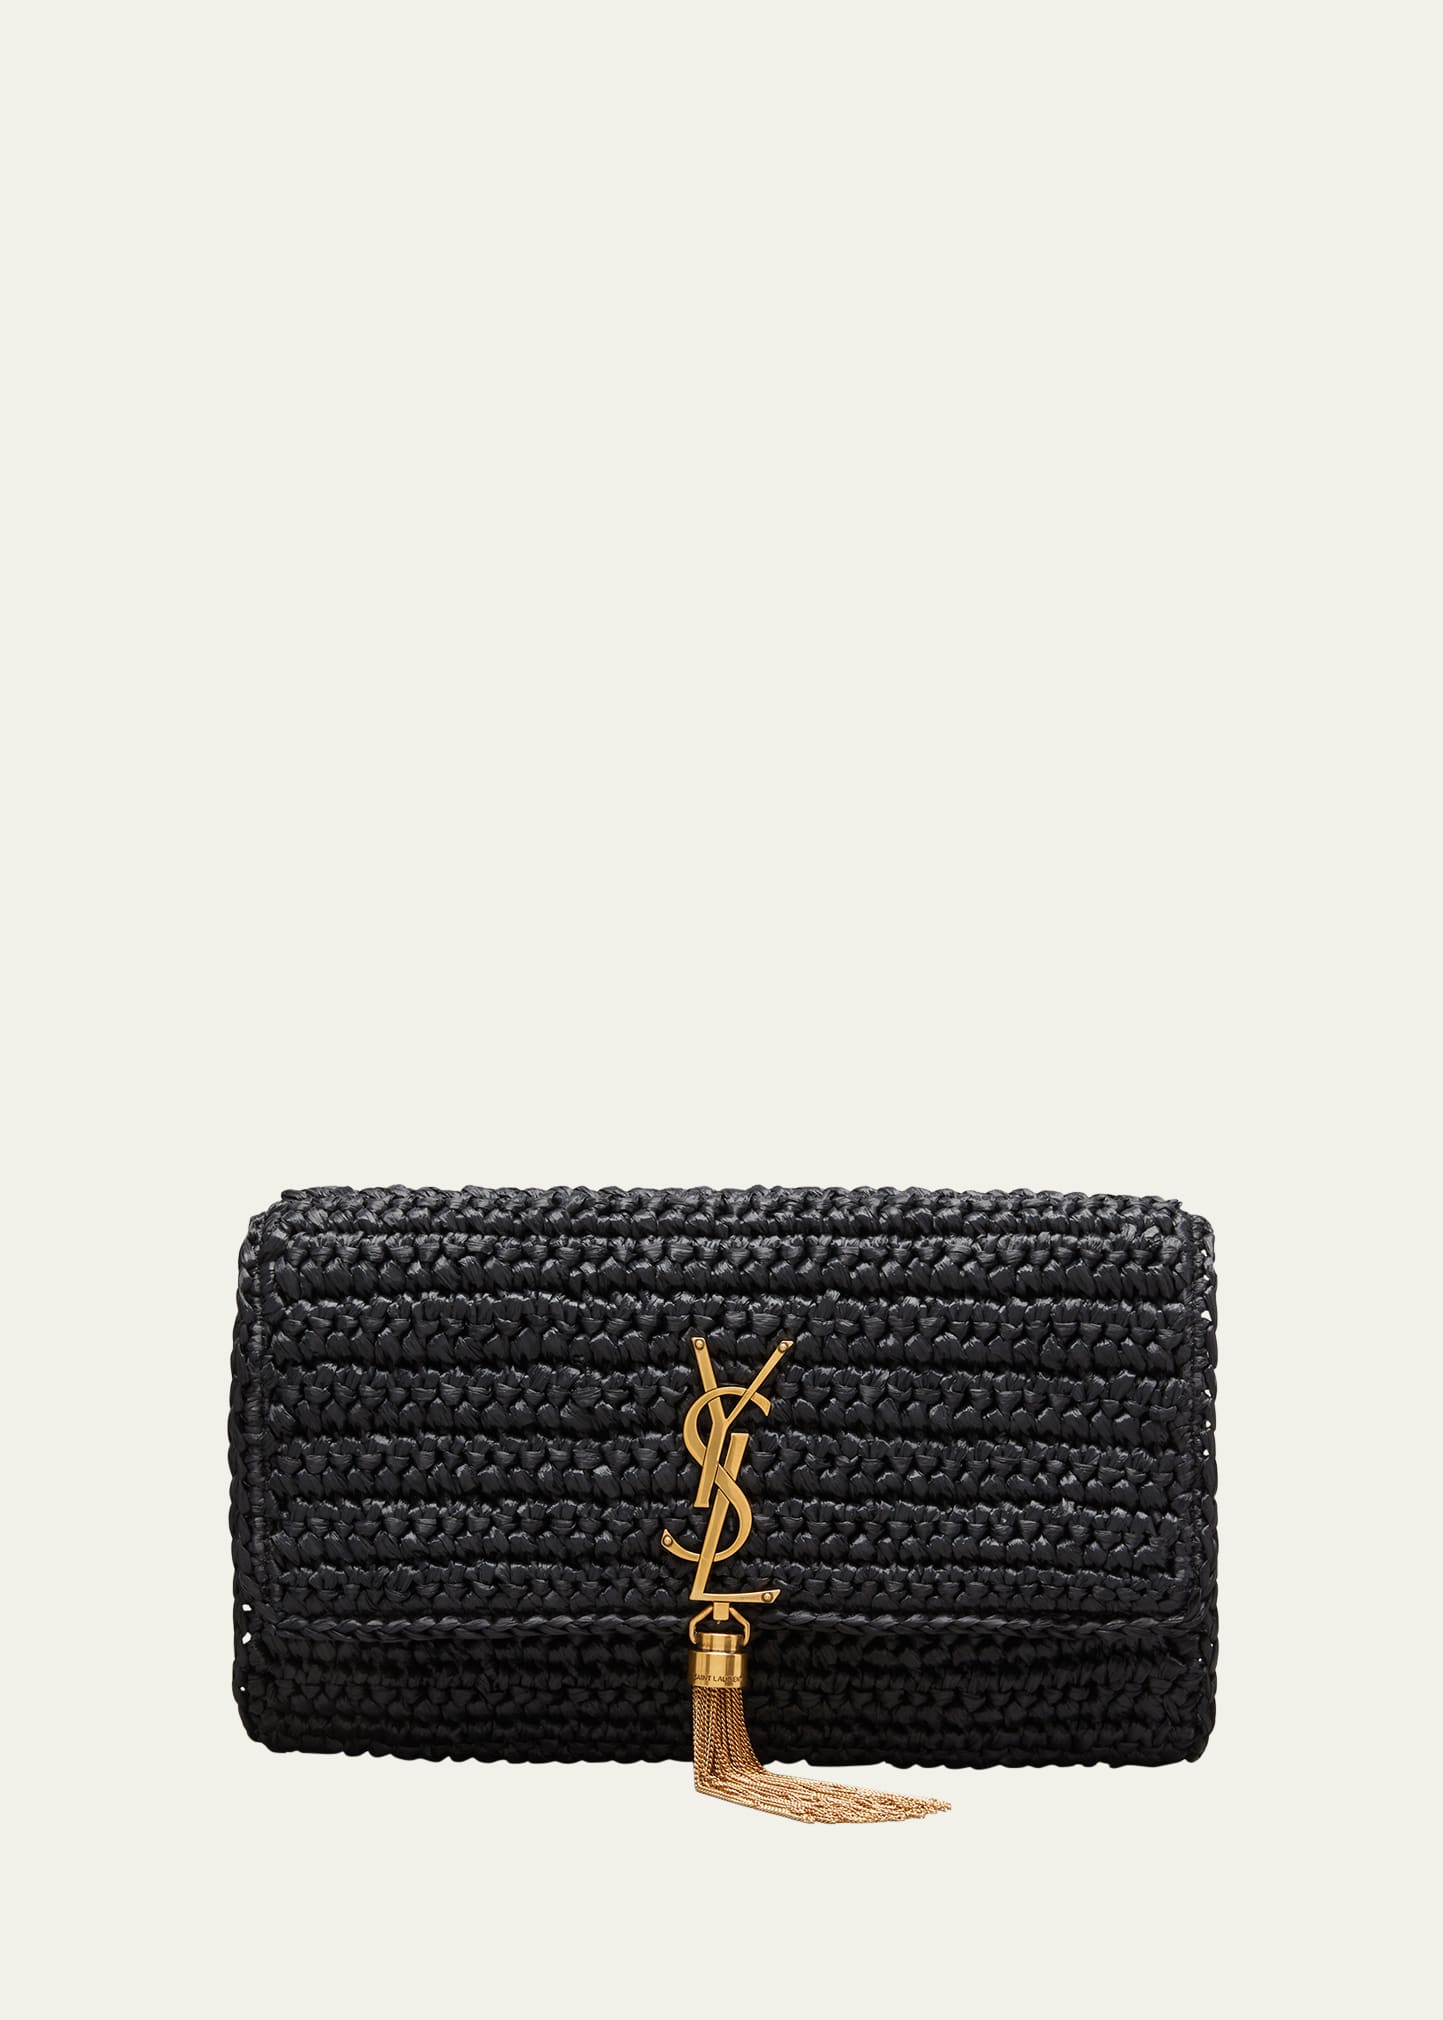 Authentic YSL Saint Laurent Medium Kate Crossbody Bag Black With